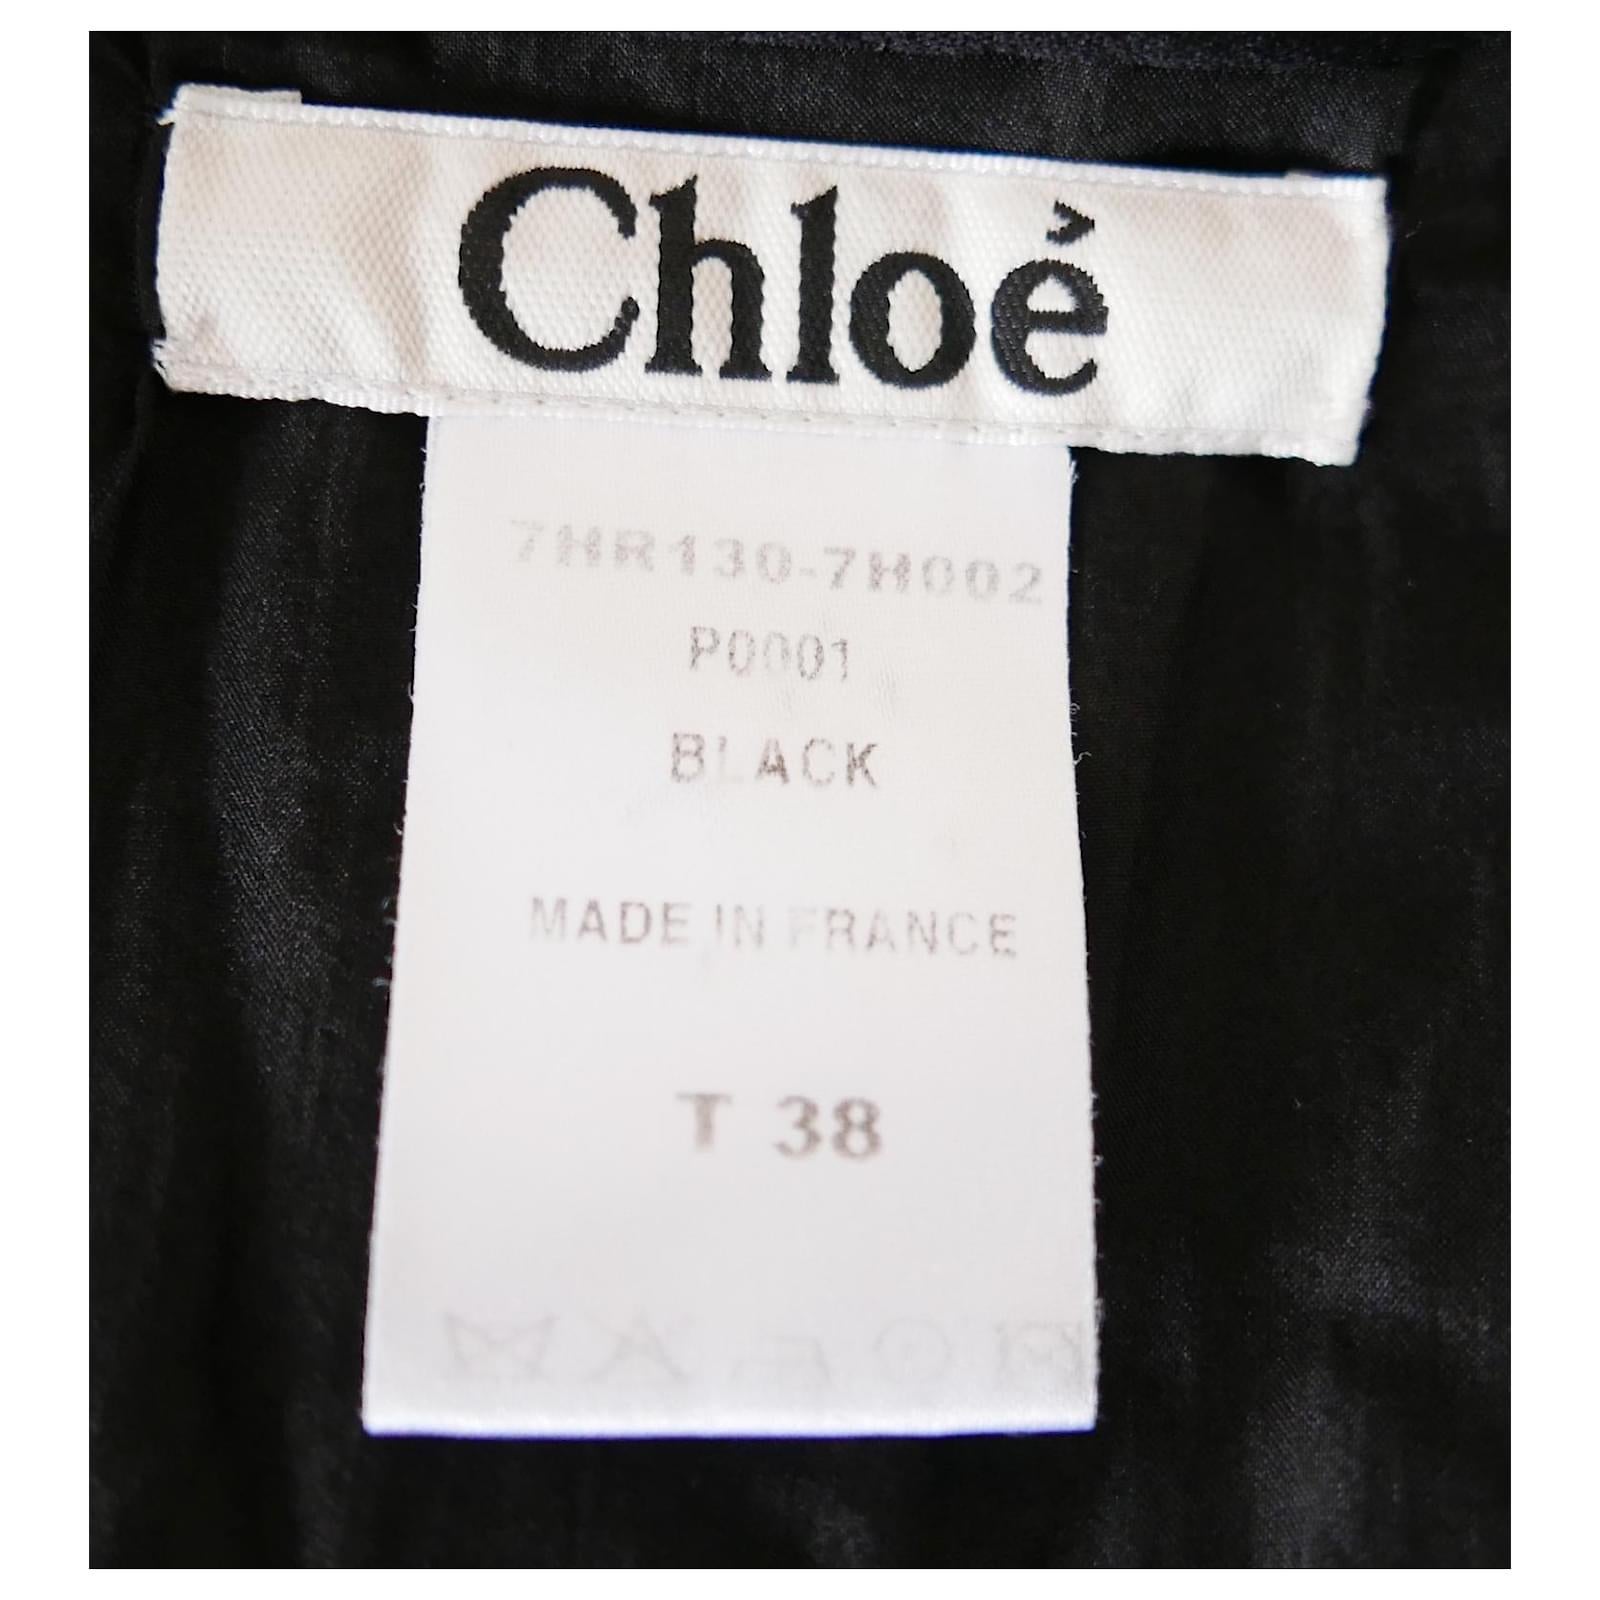 Chloé Fall 2007 Black Silk Chiffon Mixed Panel Dress For Sale 1